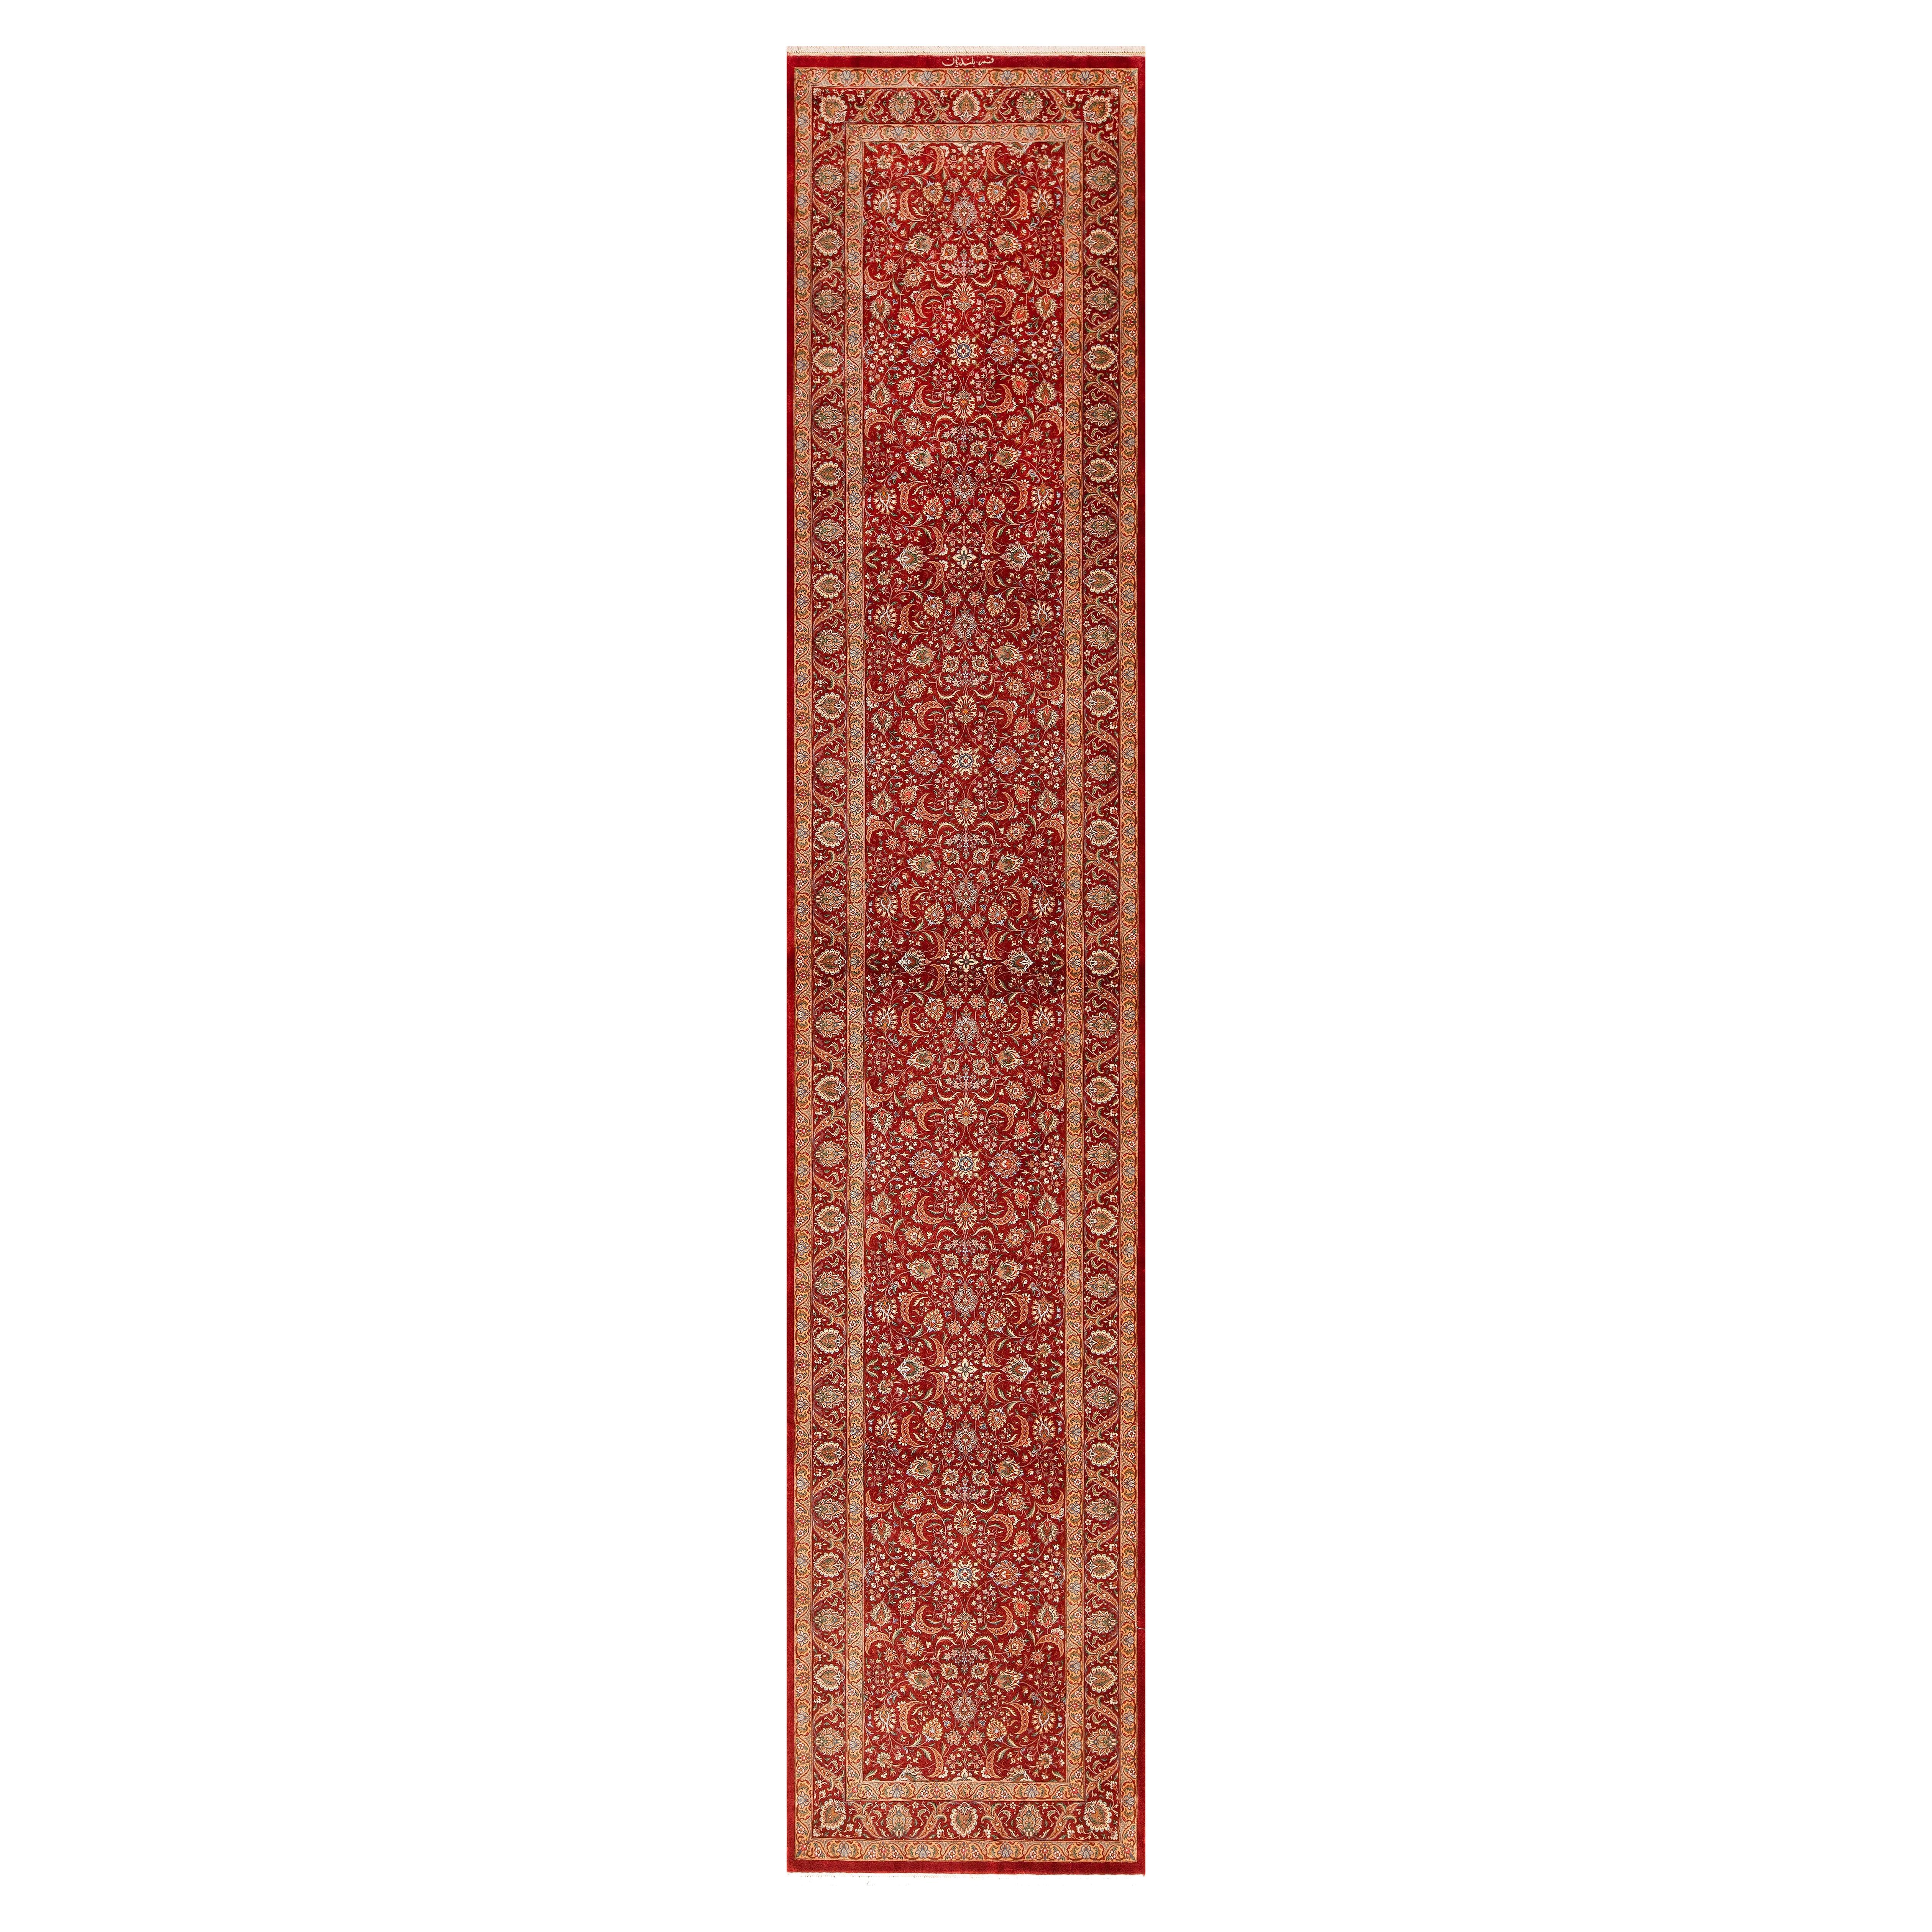 Red Fine Floral Luxurious Vintage Persian Qum Silk Runner Rug 2'9" x 13'7"